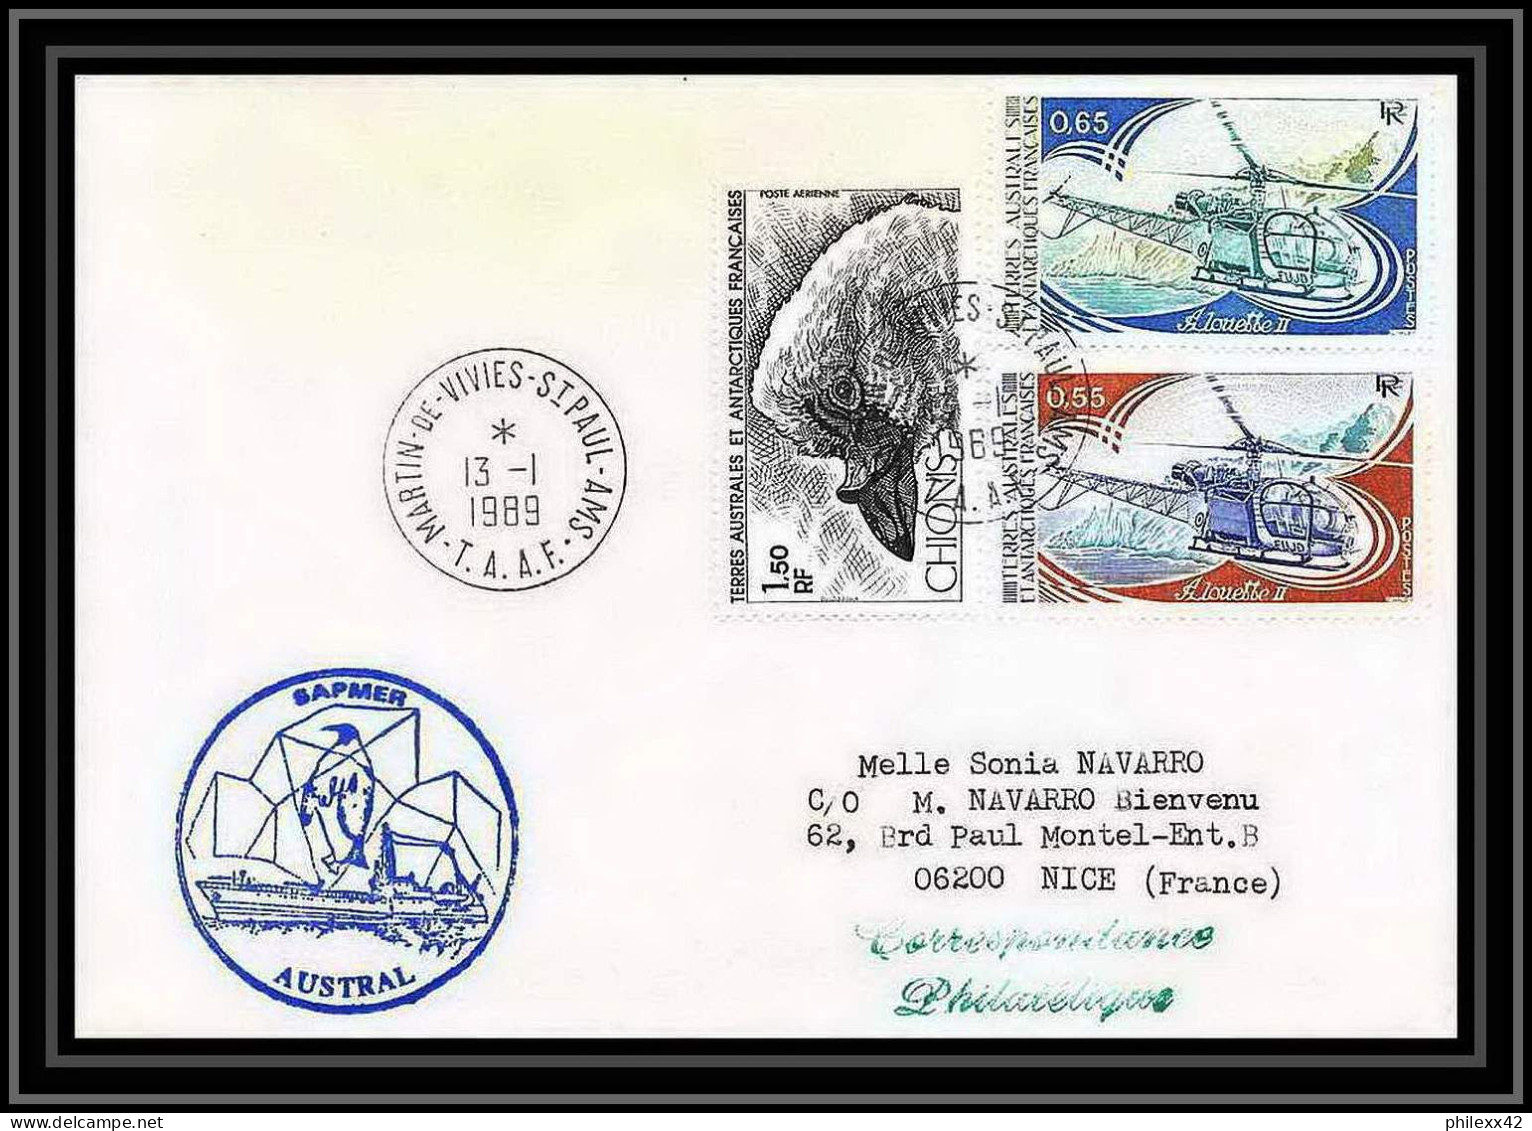 1639 Samper Austral 13/1/1989 TAAF Antarctic Terres Australes Lettre (cover) - Storia Postale